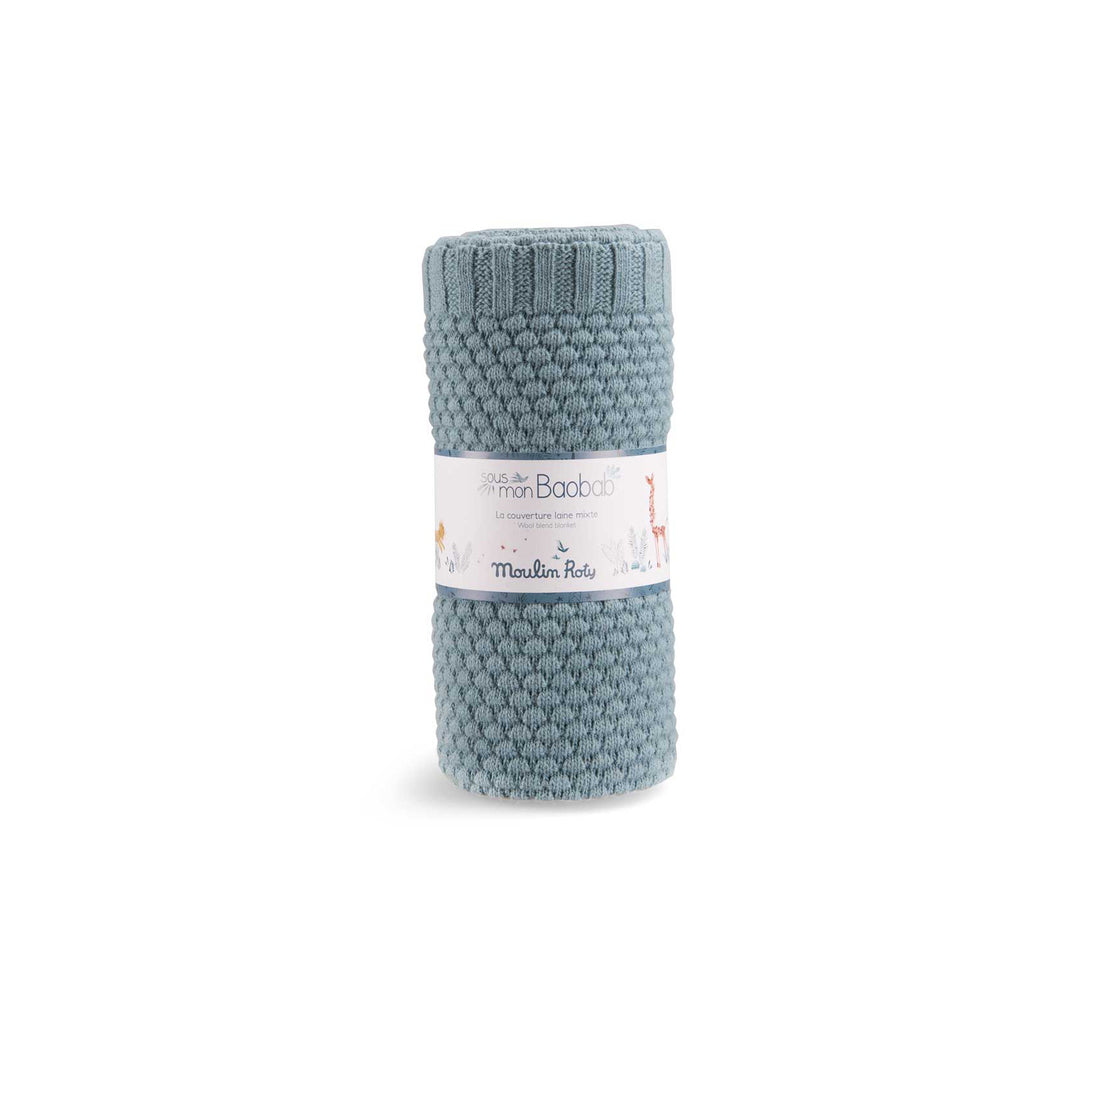 moulin-roty-sous-mon-baobab-blue-mixed-wool-blanket-moul-669089